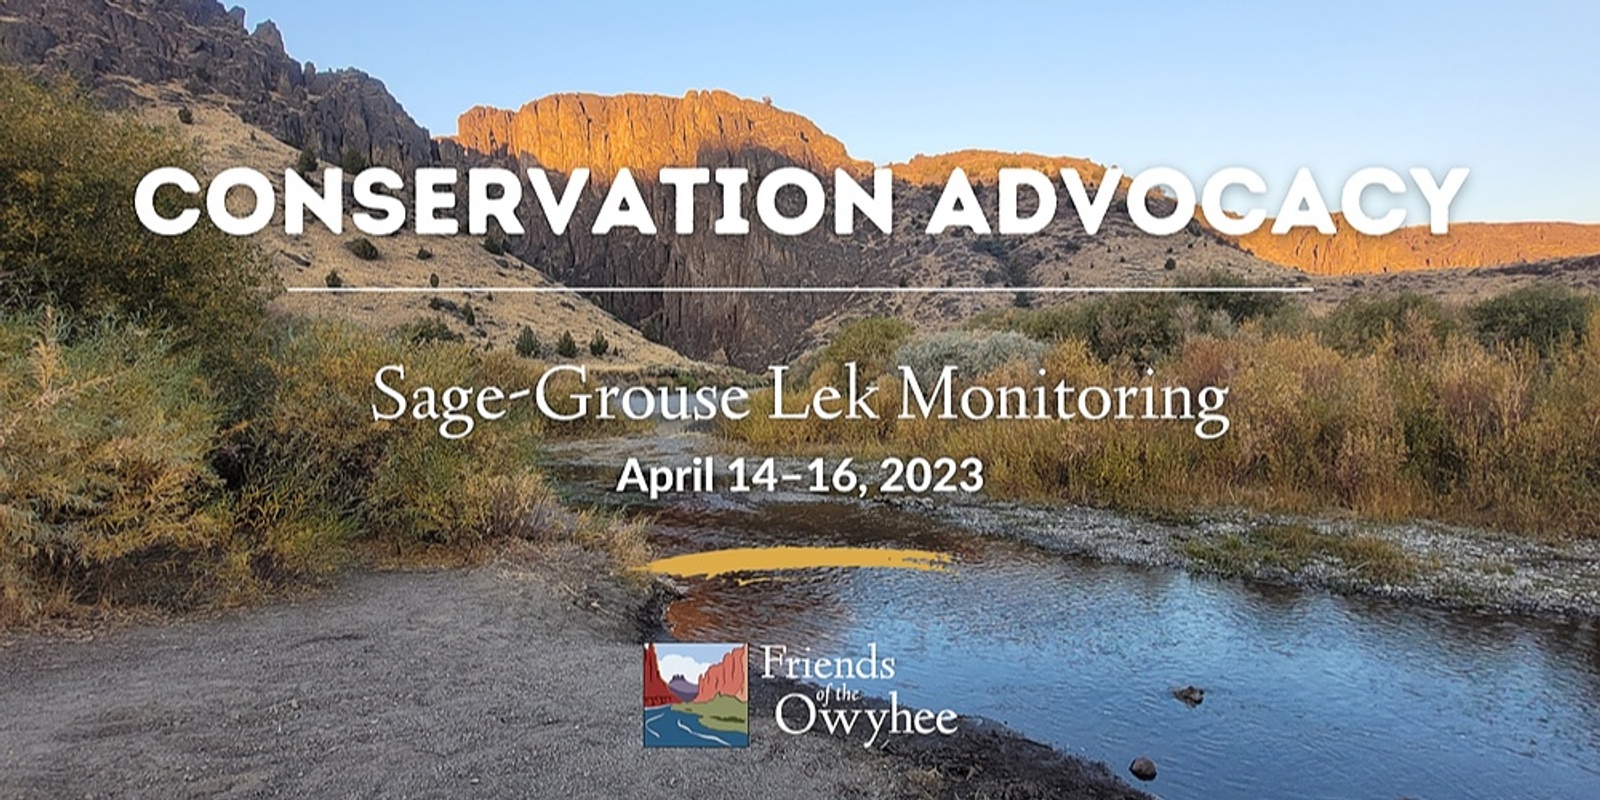 Banner image for Sage-Grouse Lek Monitoring